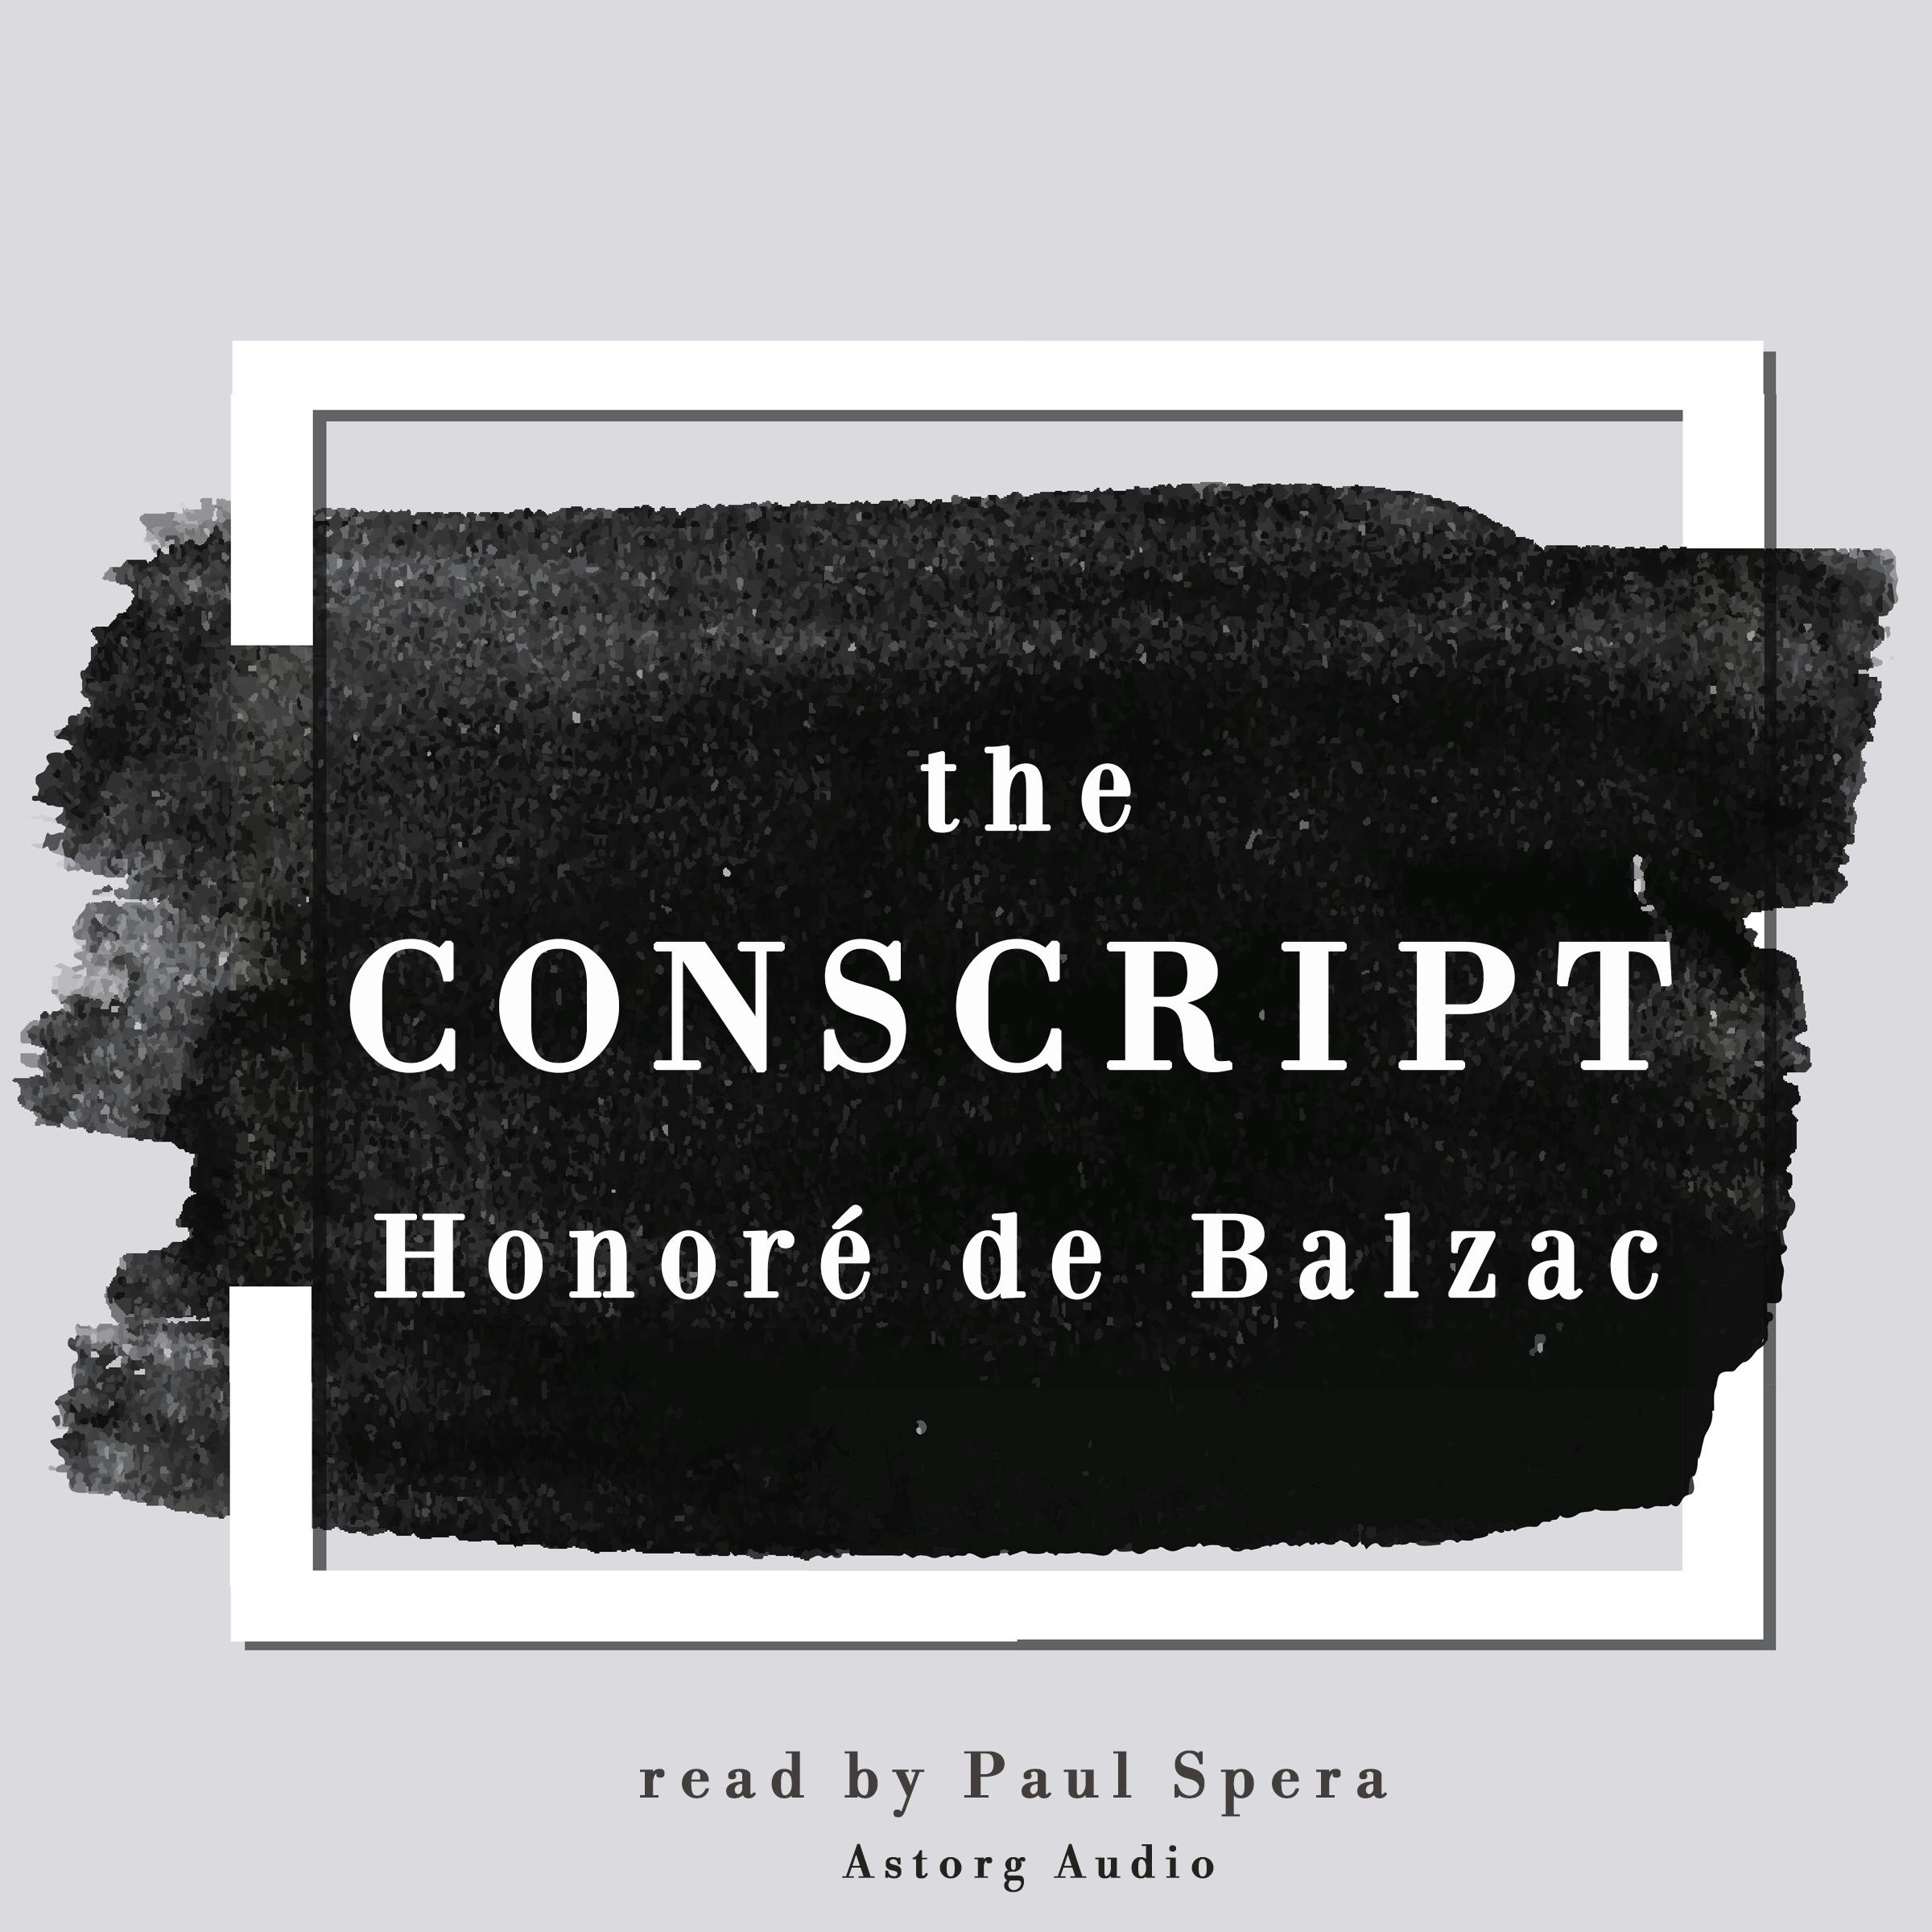 The Conscript, a short story by Honoré de Balzac - undefined